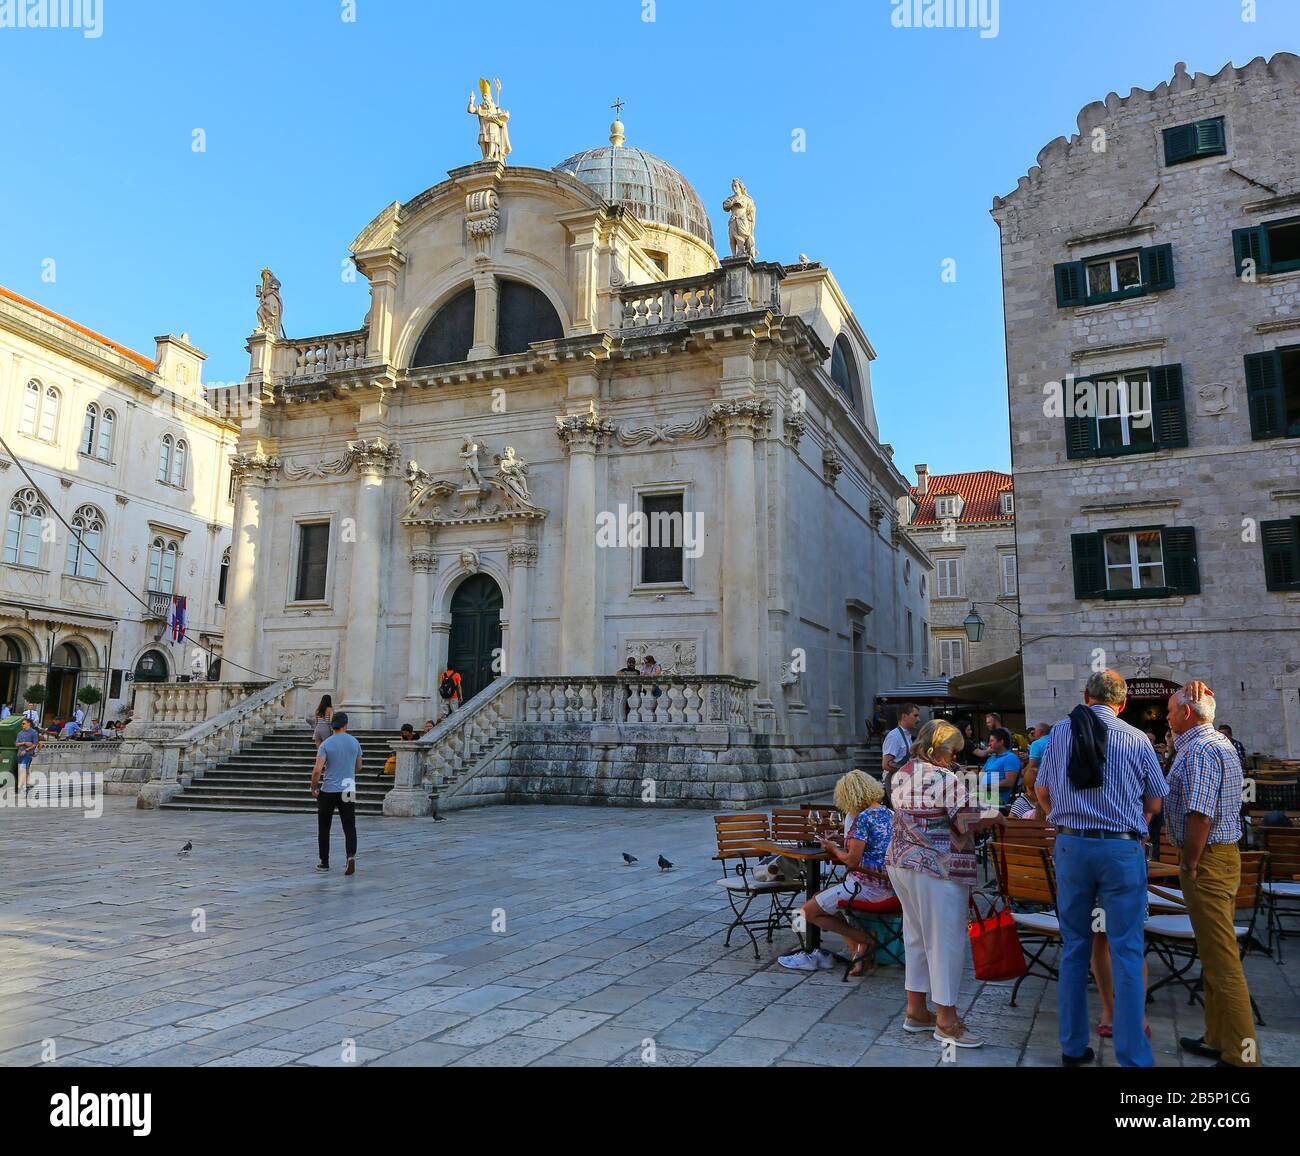 Die façade des Barock der Kirche St. Blaise, der Altstadt, Dubrovnik, Kroatien Stockfoto